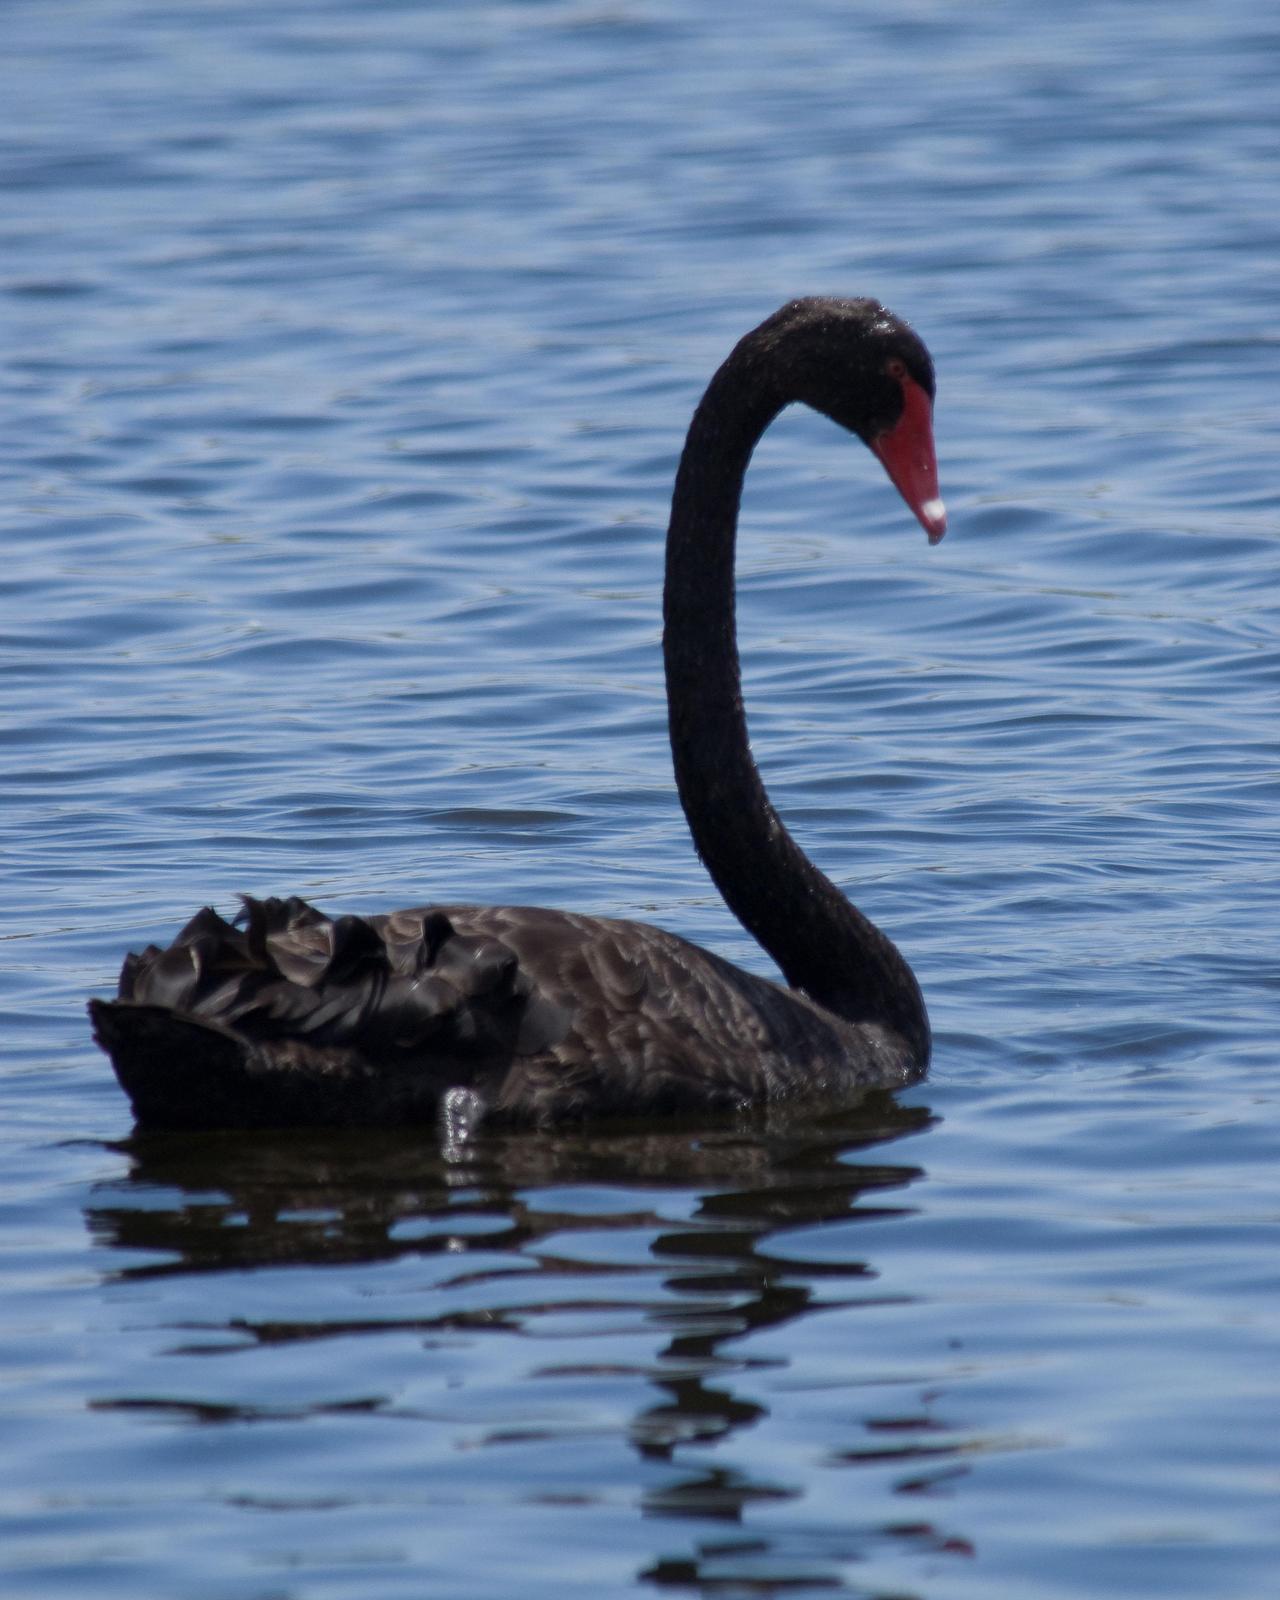 Black Swan Photo by Steve Percival